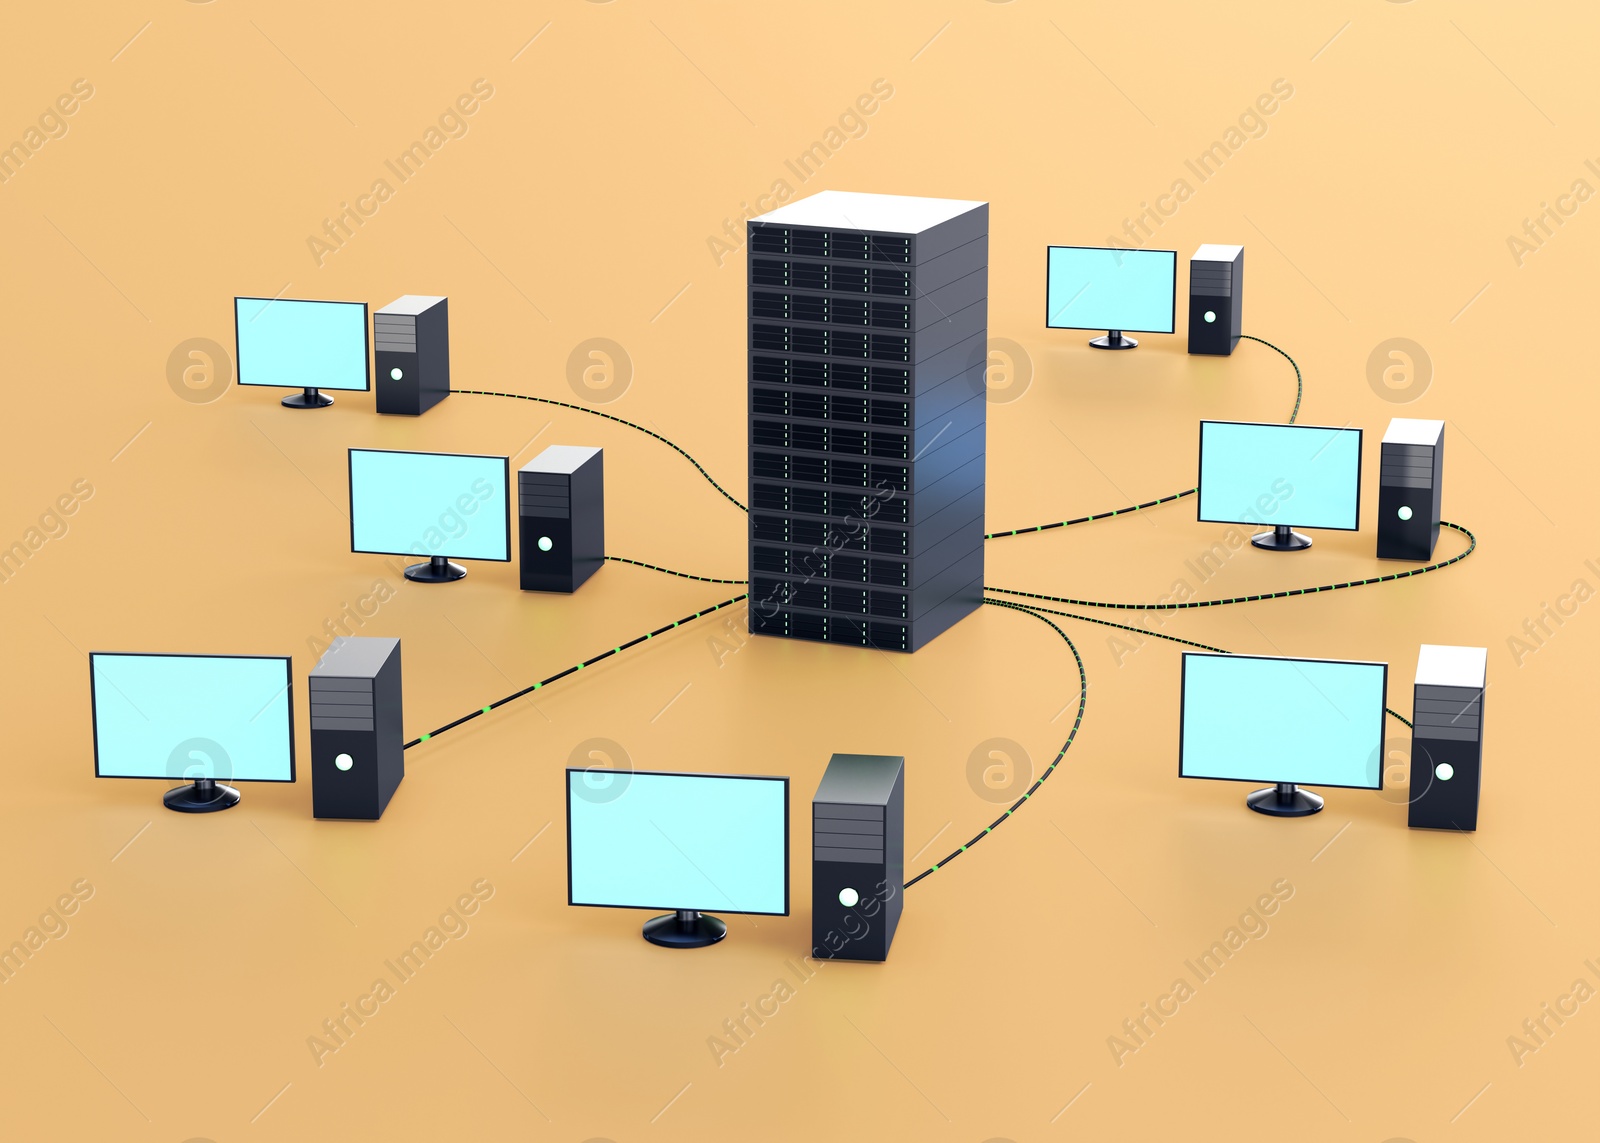 Illustration of Computers connected with server on light orange background, illustration. Multi-user system